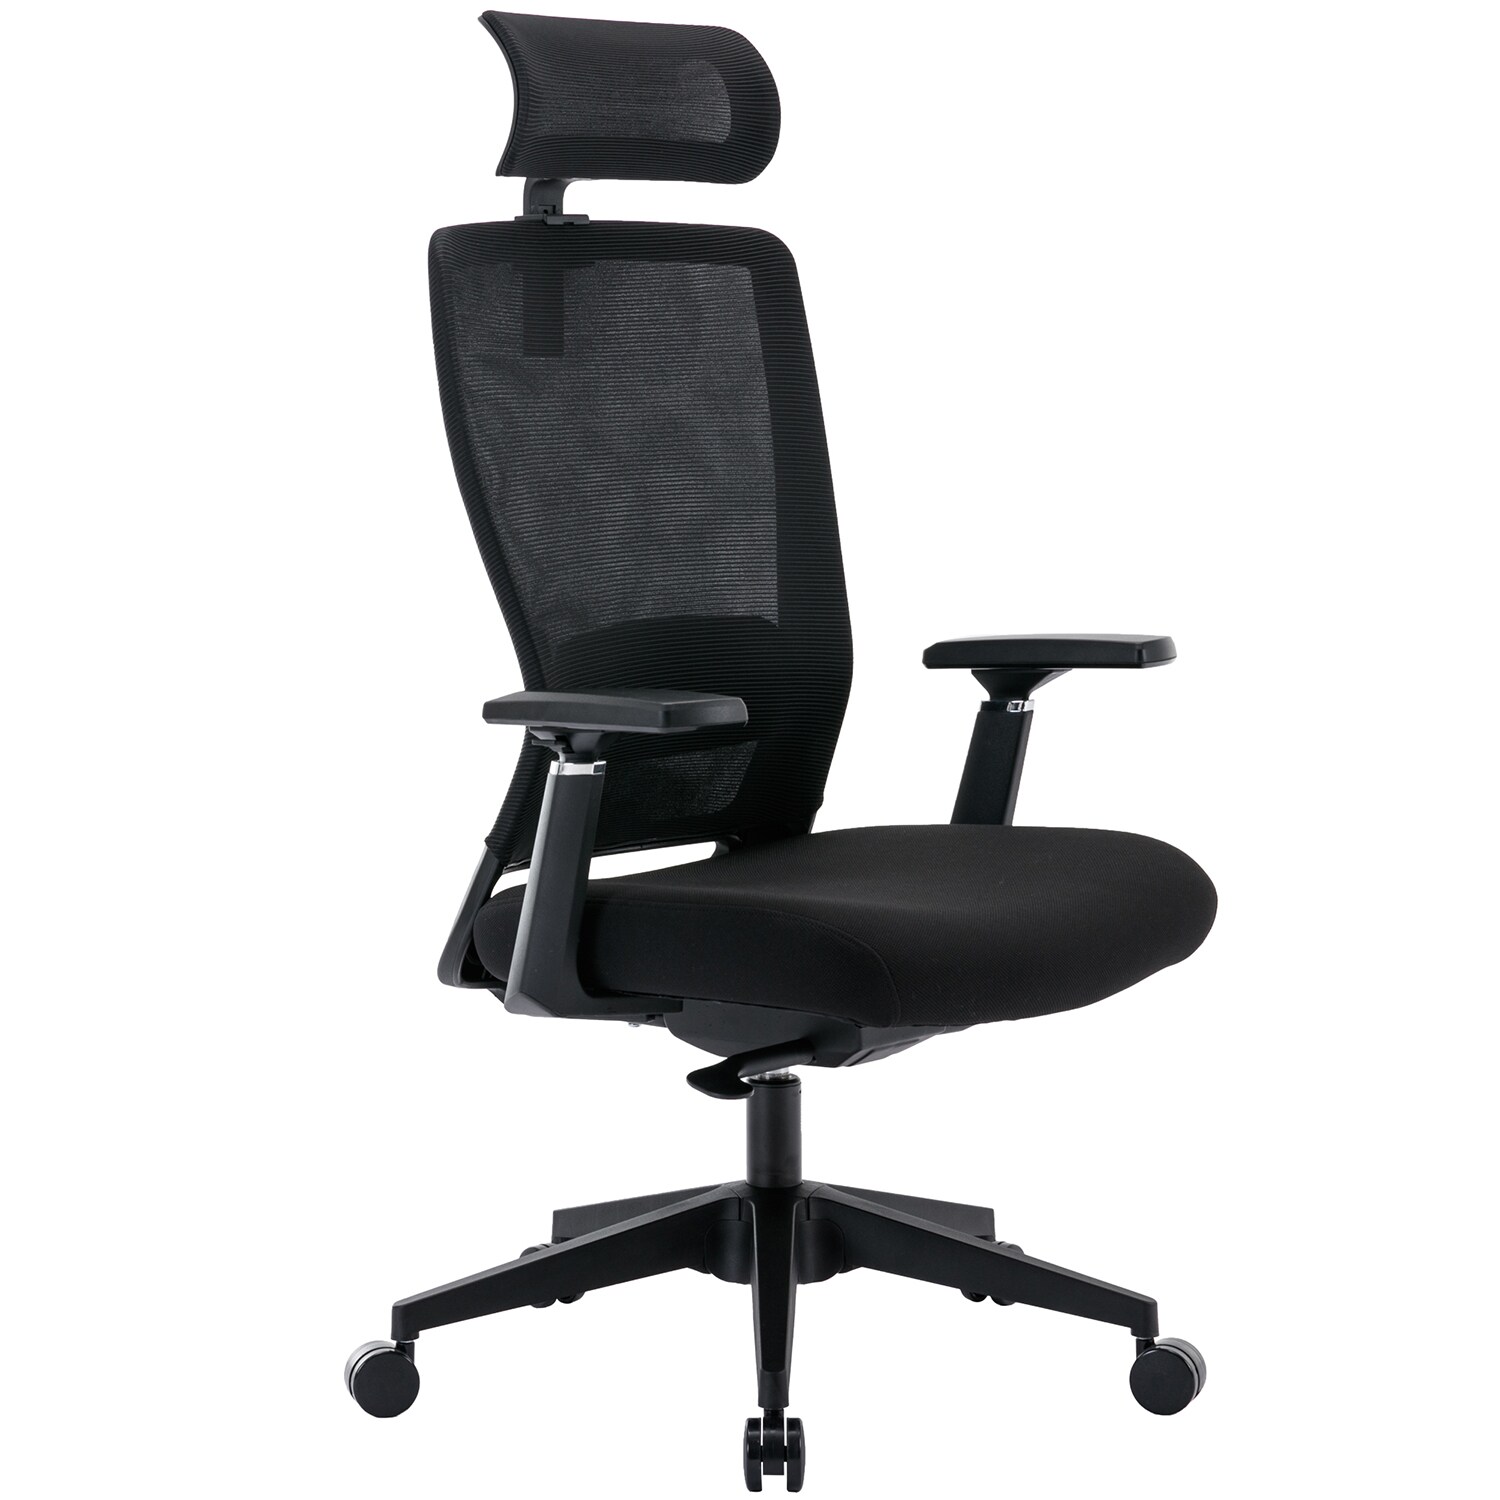 Ergonomic Office Chair, High Back Adjustable Computer Desk Chair